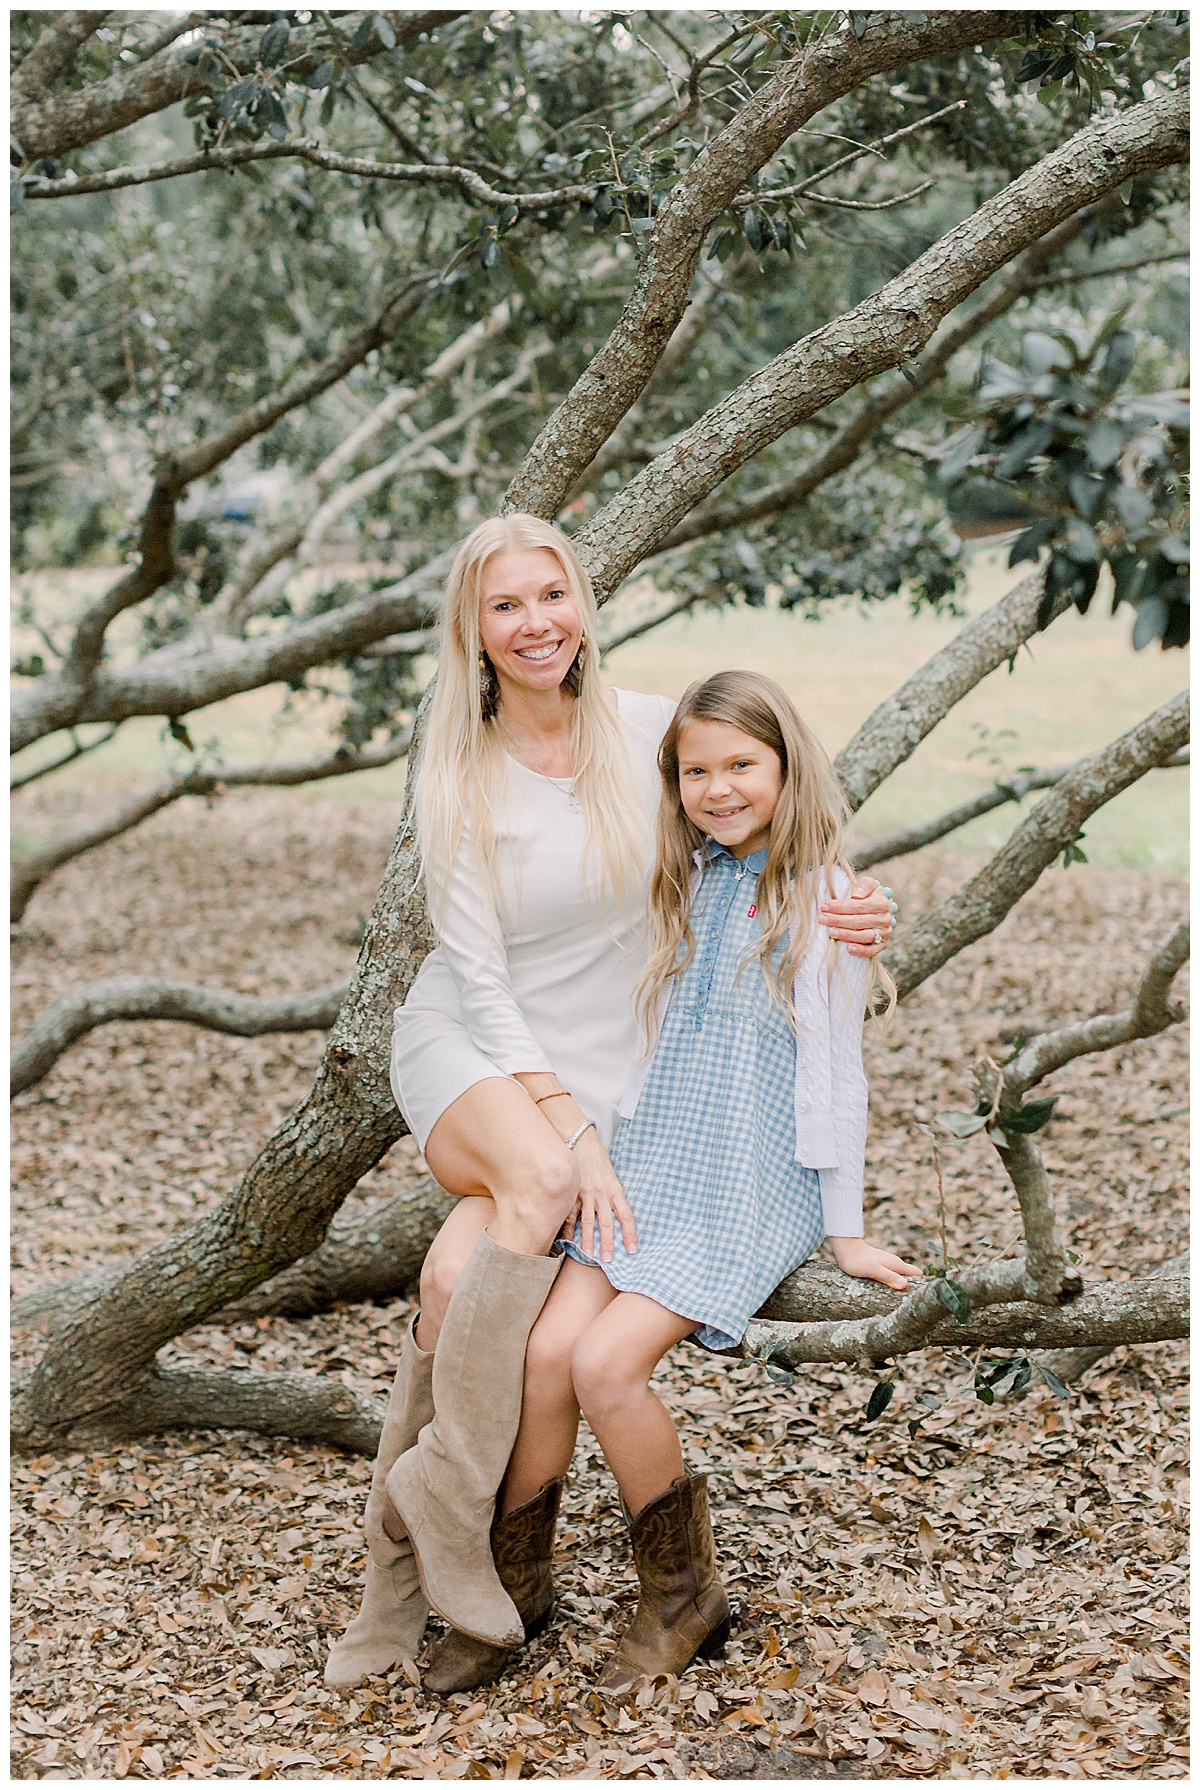 The Speir Family - Family Portraits in Charleston Gardens | Charleston Family Photographer | Candice Adelle Photography_0164.jpg